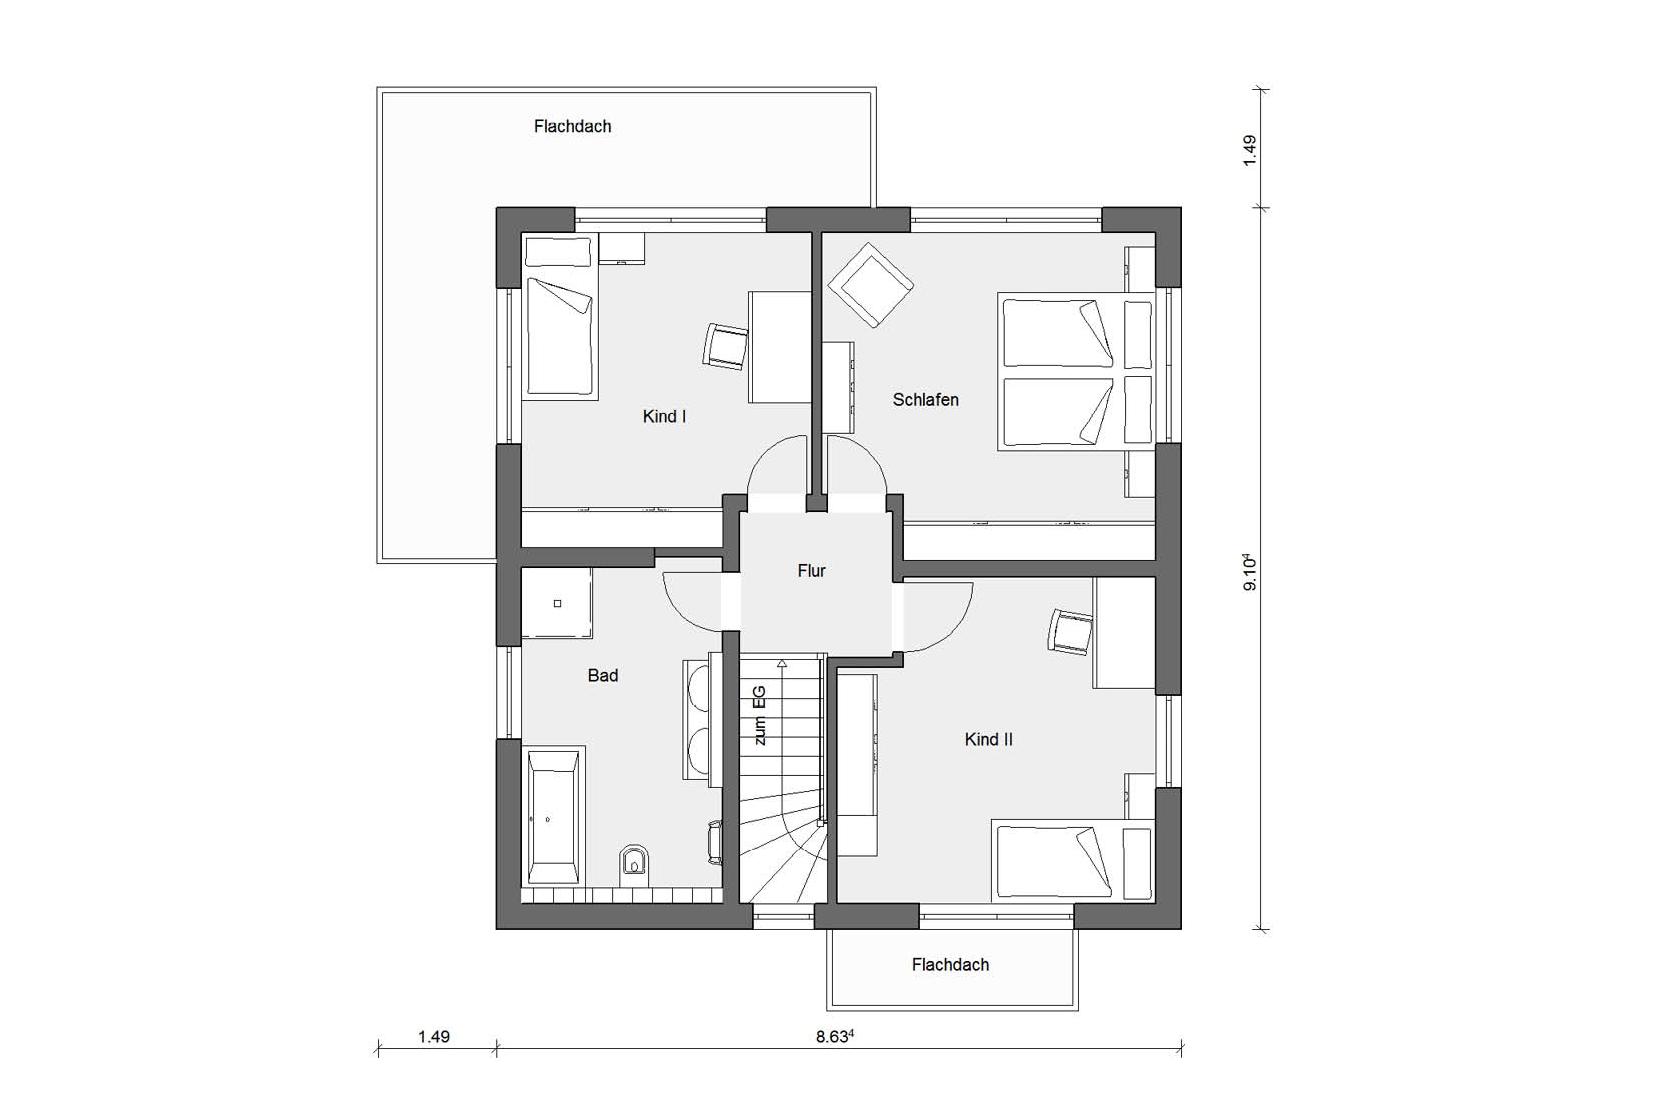 Pianta soffitta E 20-142.3 Casa prefabbricata in stile Bauhaus